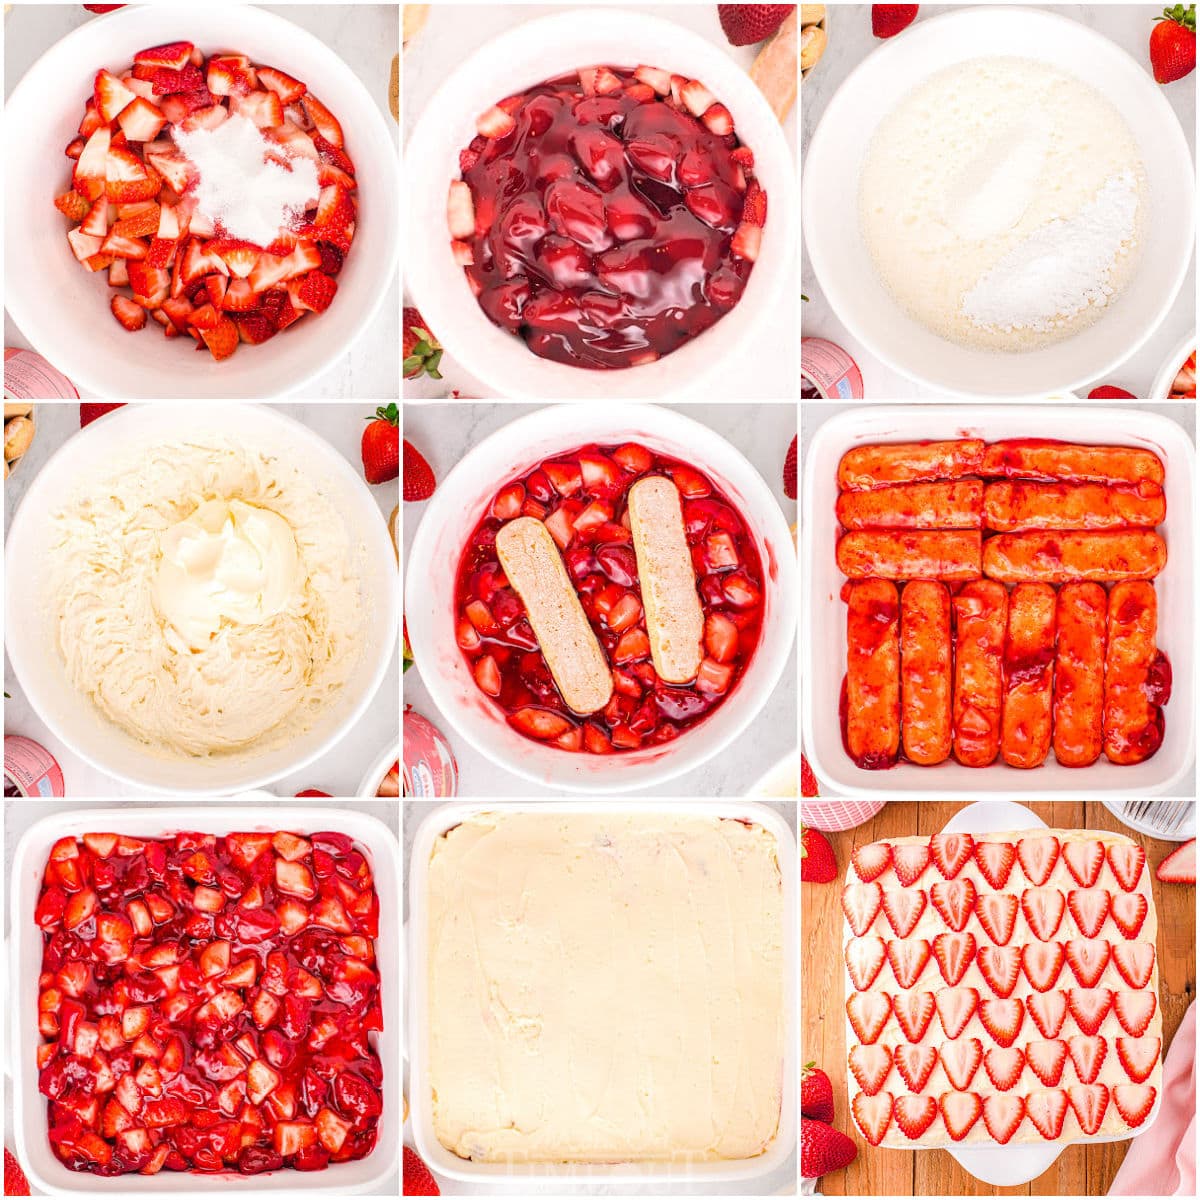 nine image collage showing how to make strawberry tiramisu step by step.